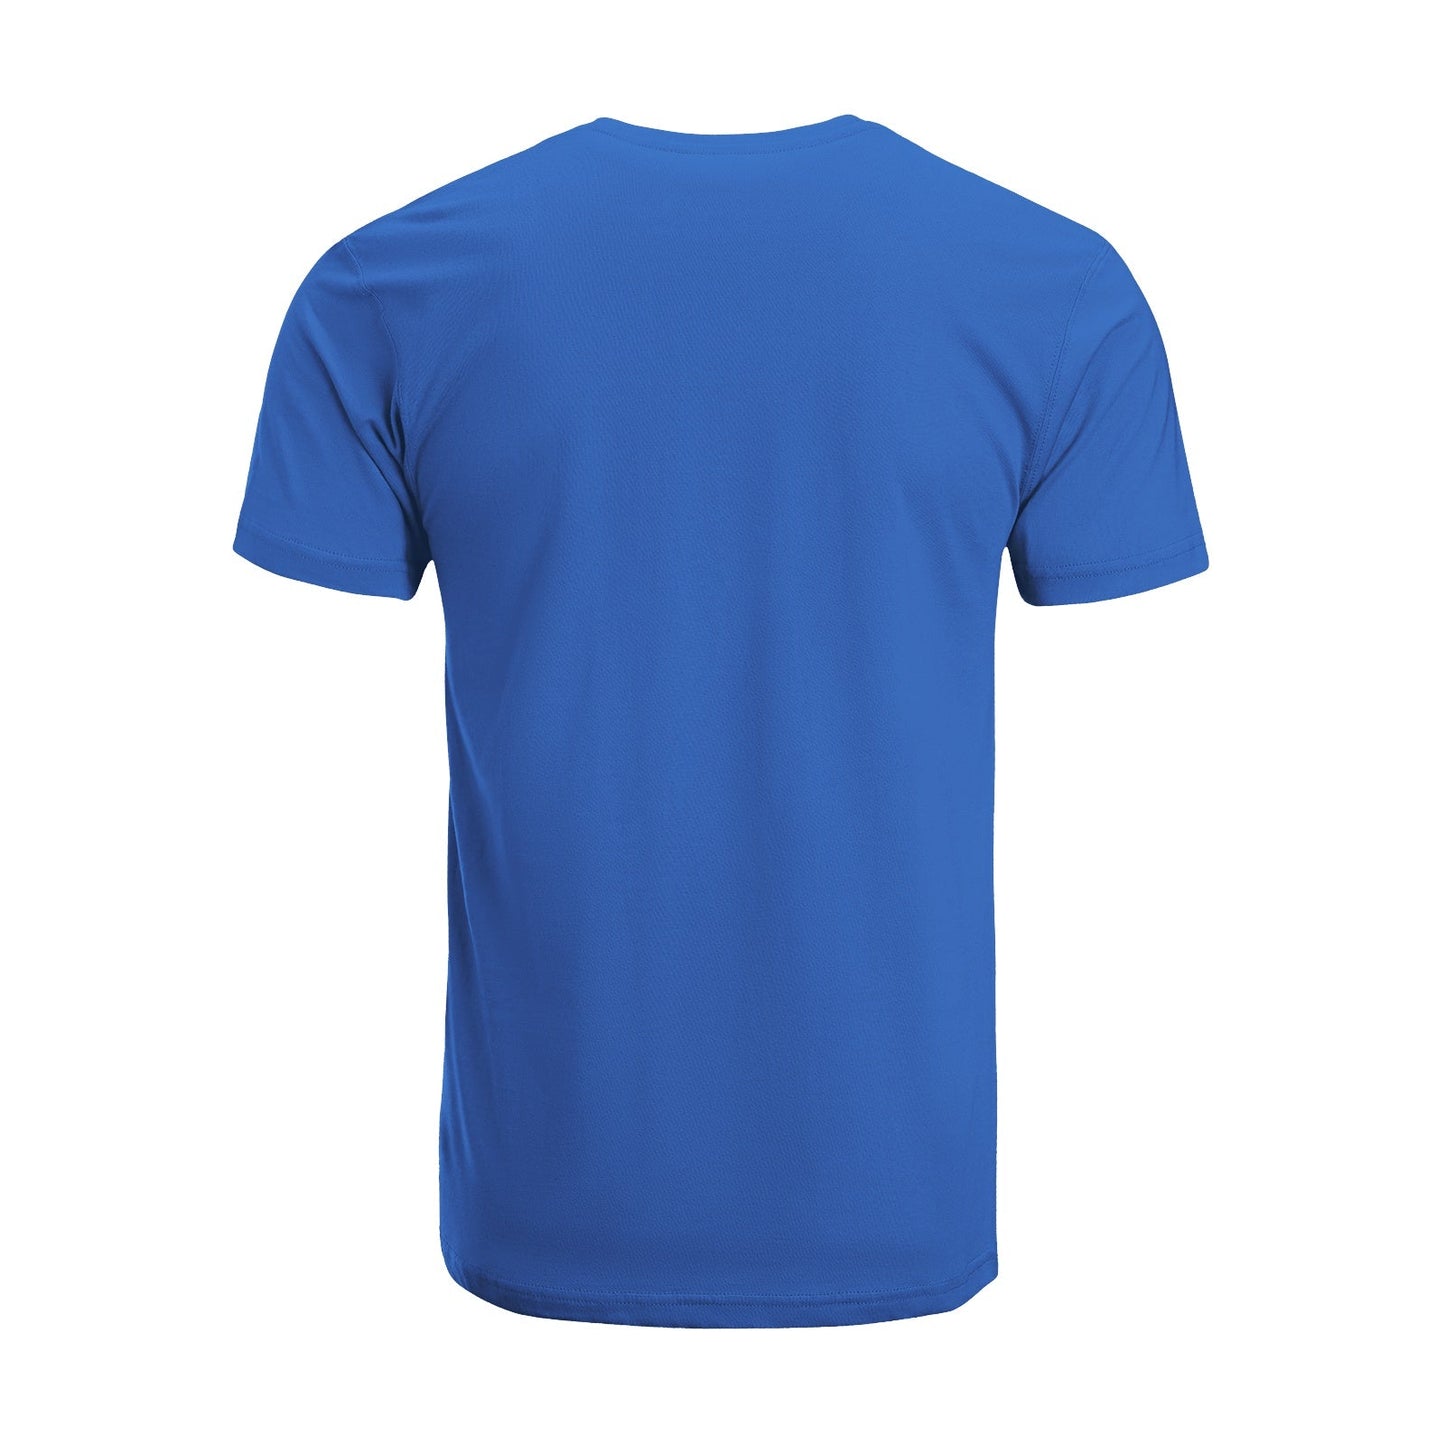 Unisex Short Sleeve Crew Neck Cotton Jersey T-Shirt MOM 30